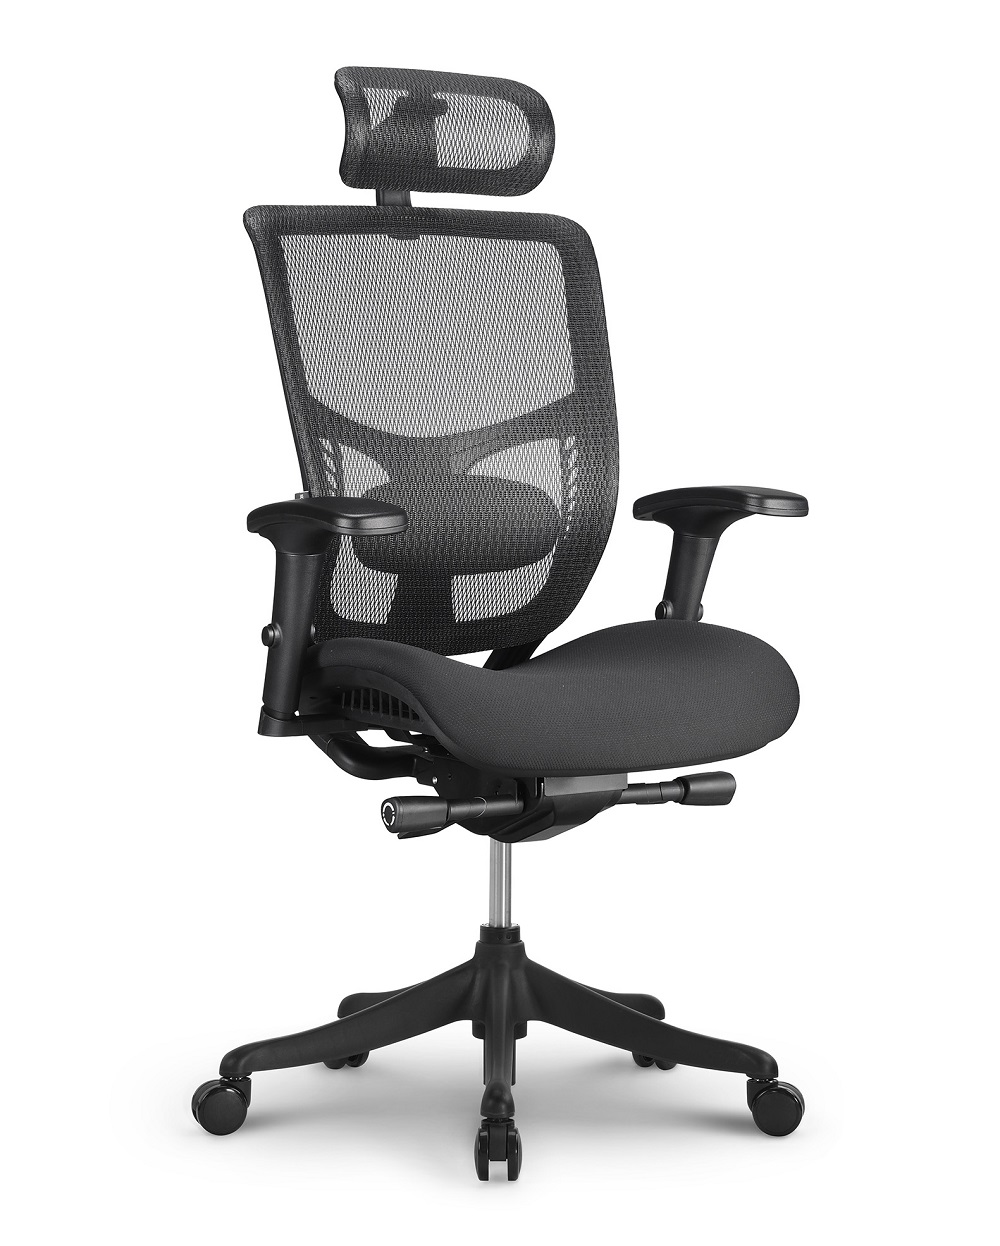 SIM-MF01 ergonomic office chair with mulfifunctional lumbar support